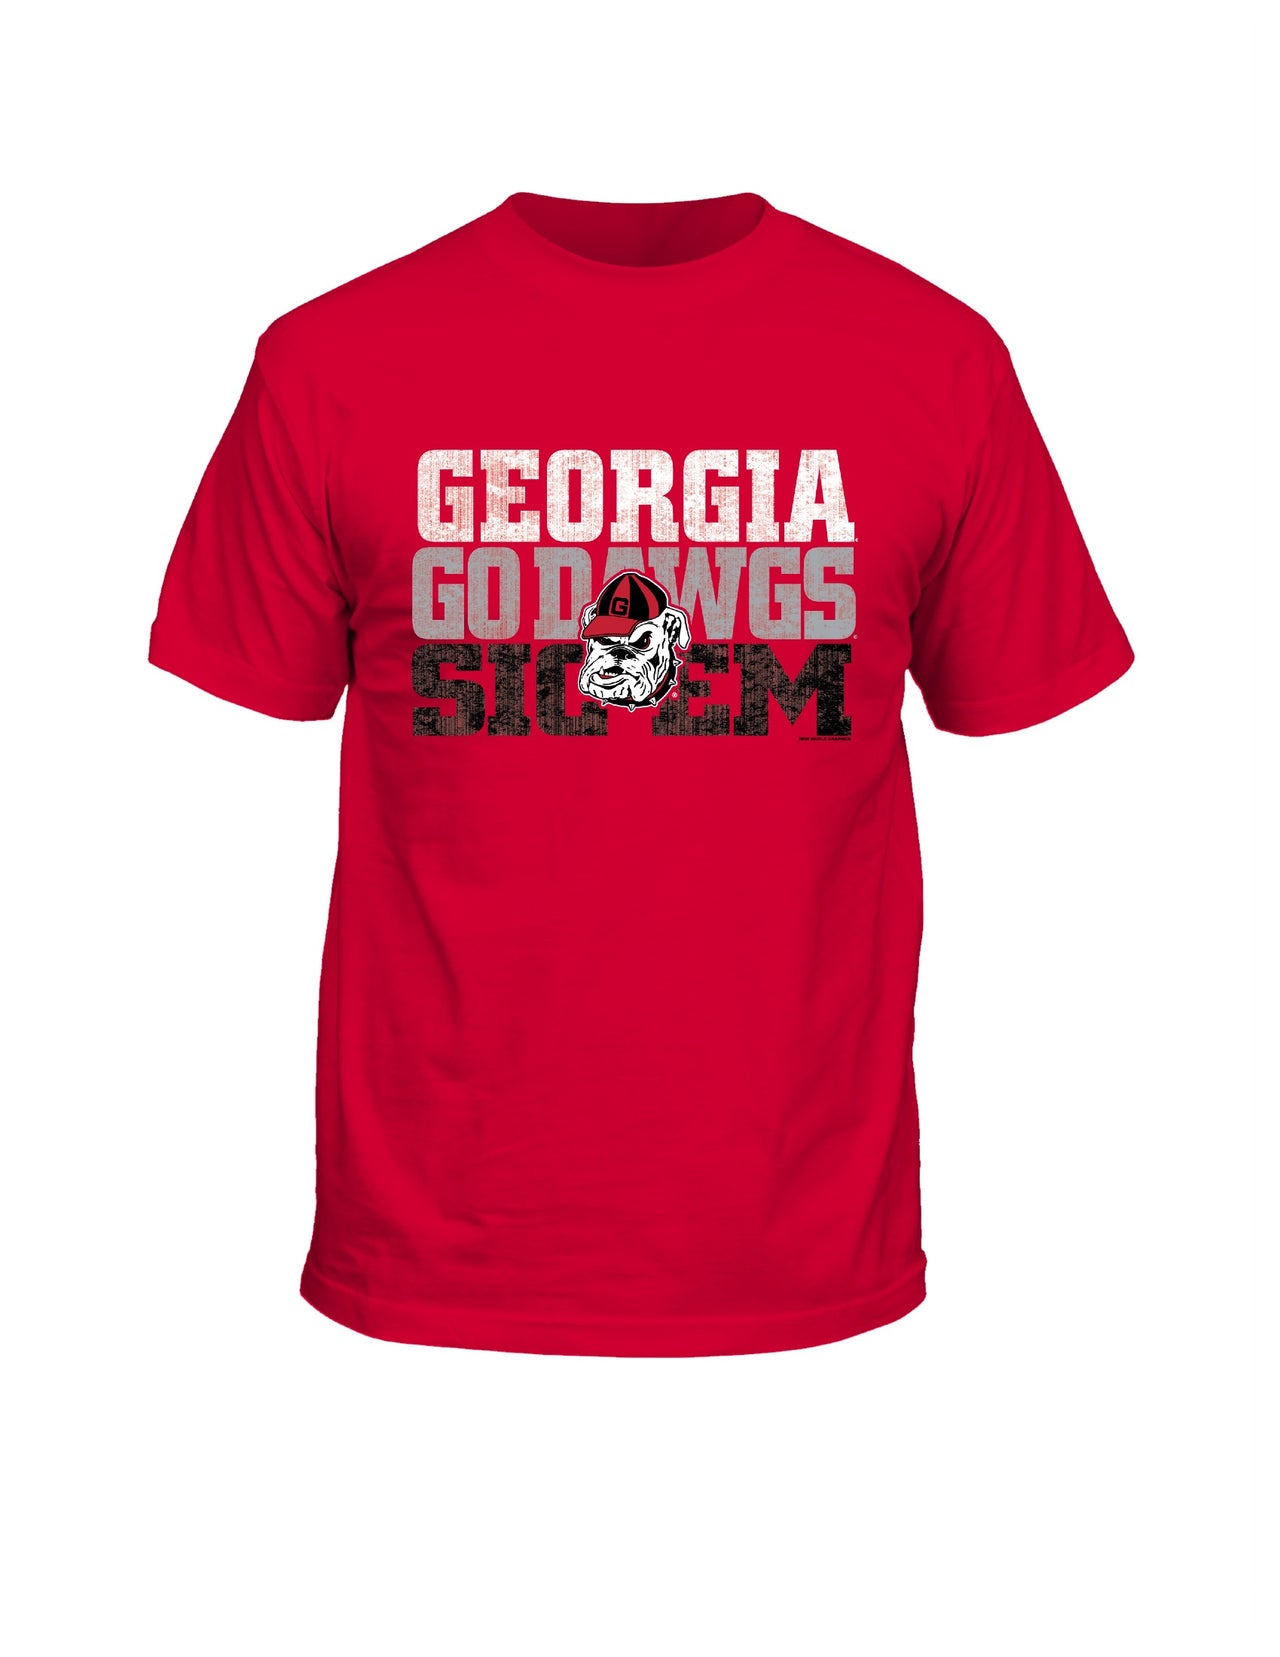 Georgia Bulldogs Sic 'Em T-shirt